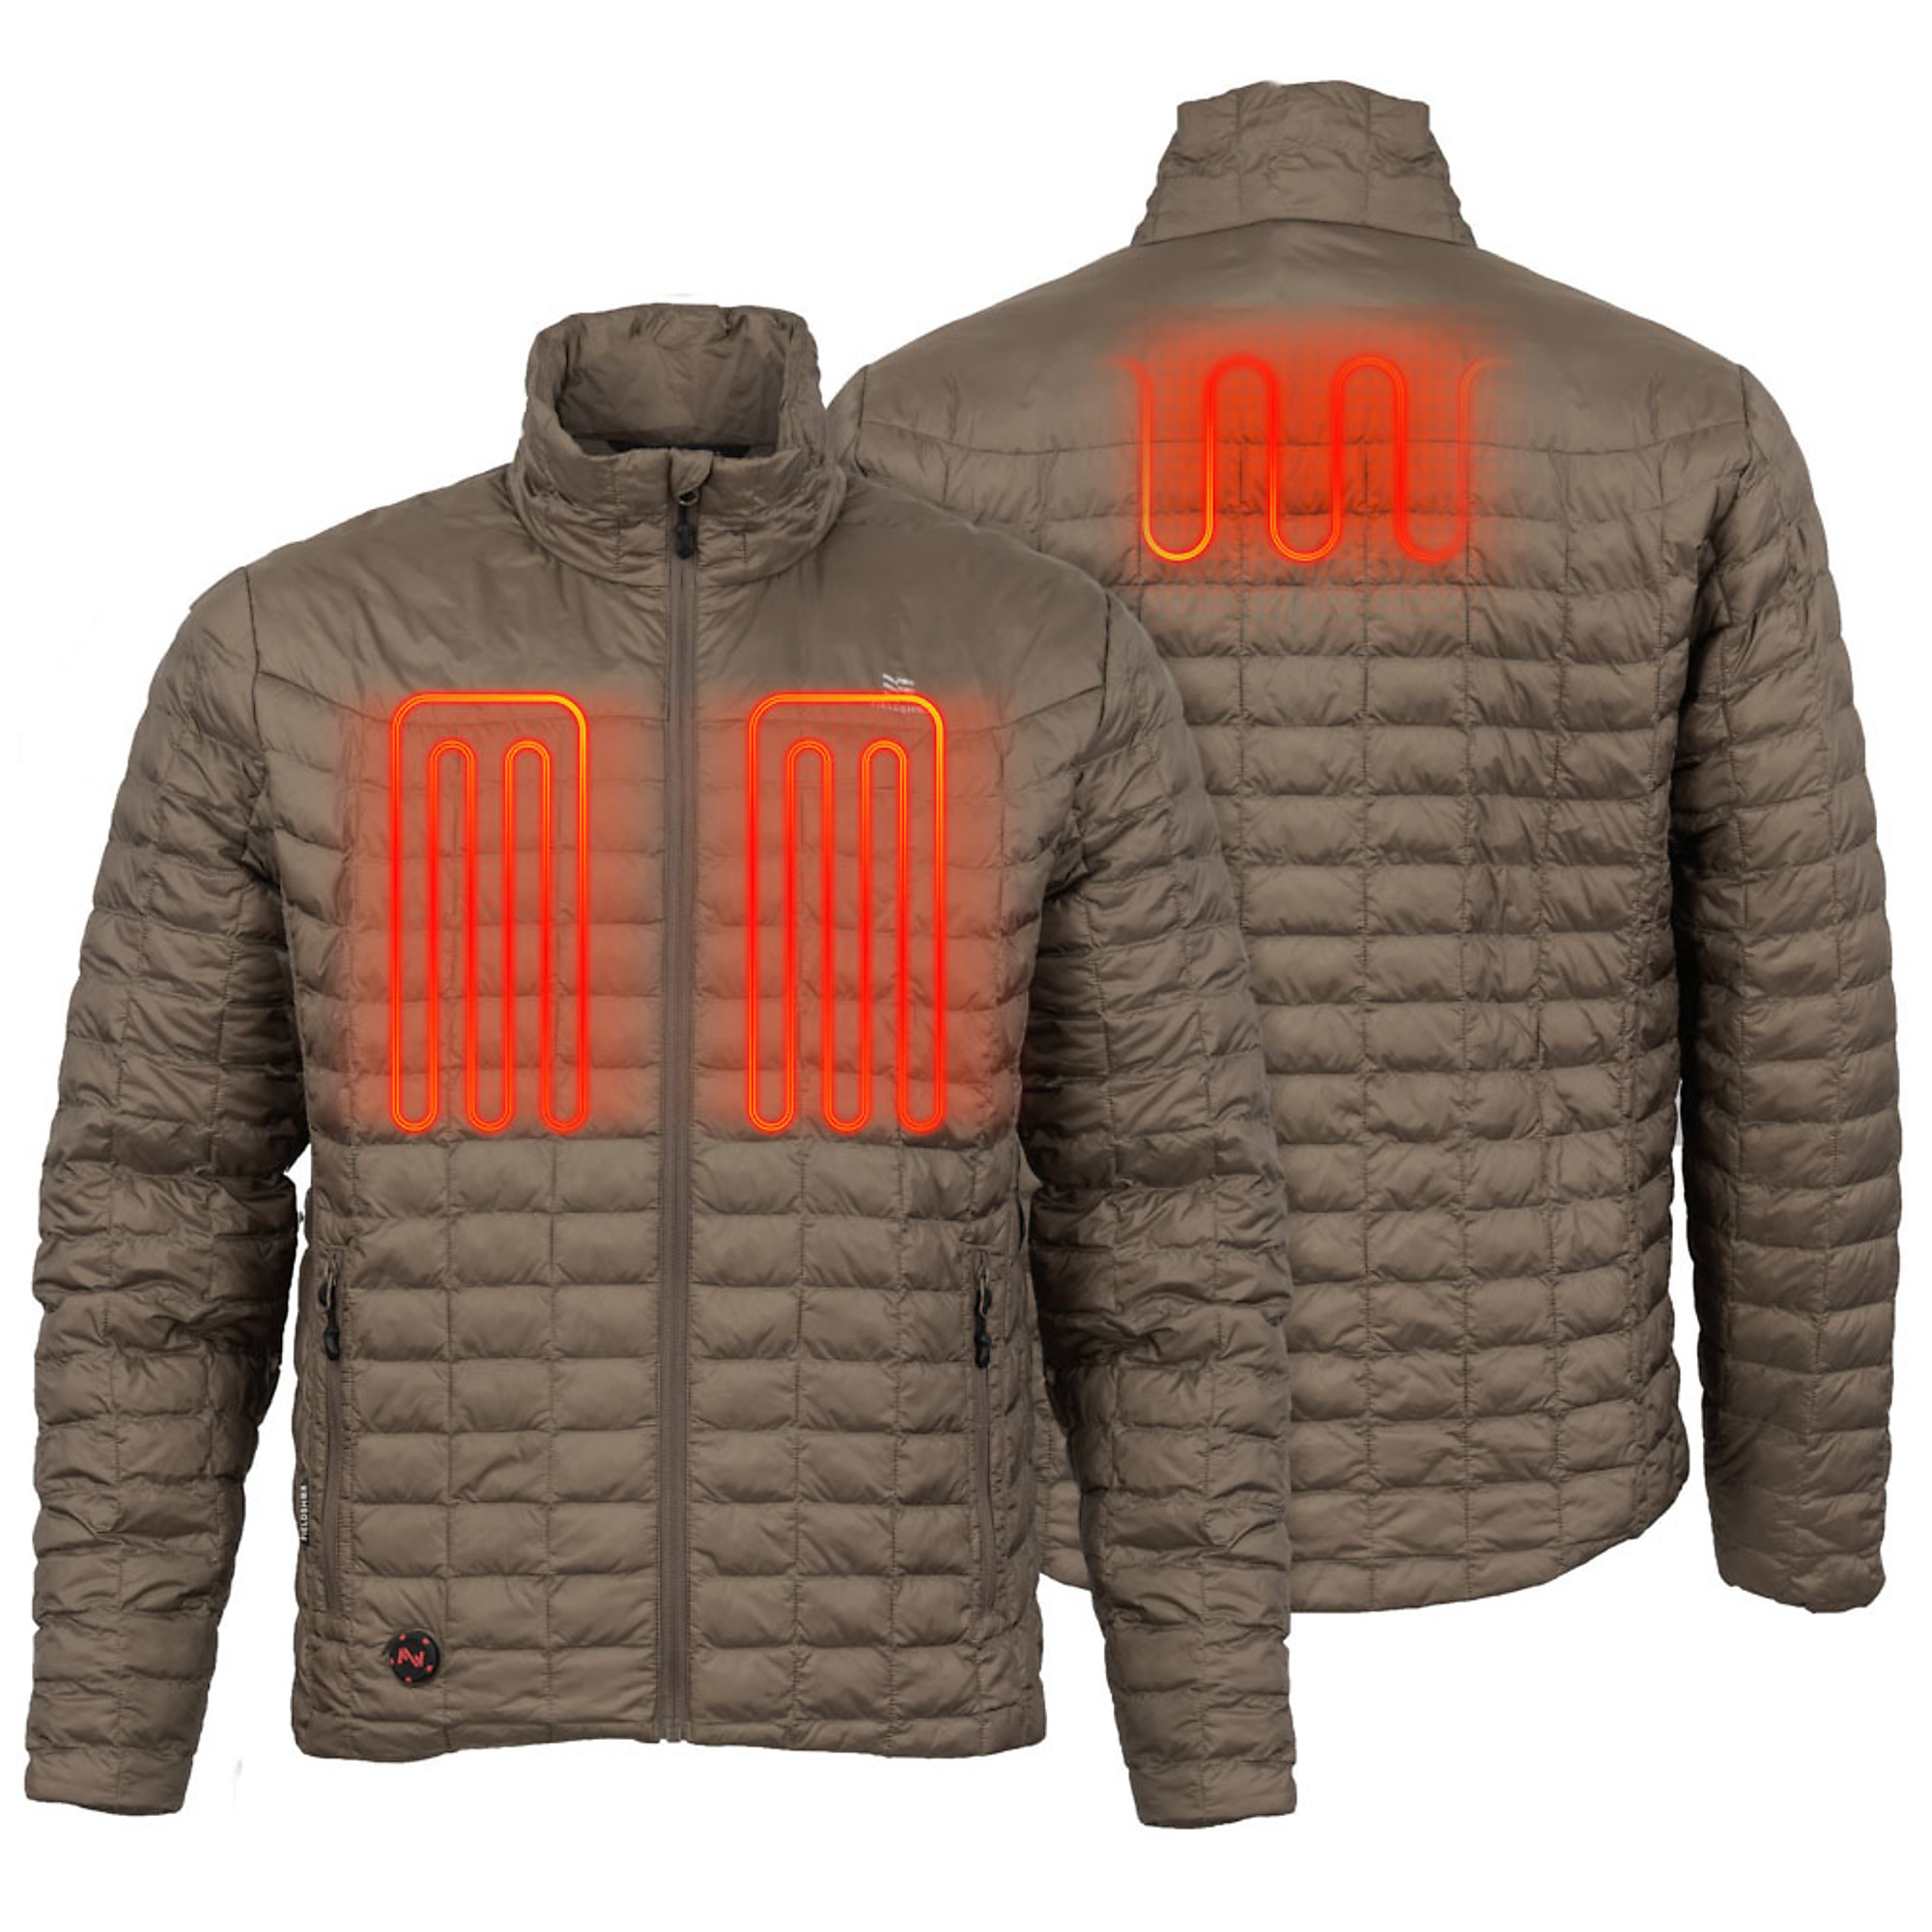 Fieldsheer, Men's Backcountry Heated Jacket with 7.4v Battery, Size 2XL, Color Tan, Model MWMJ04340621